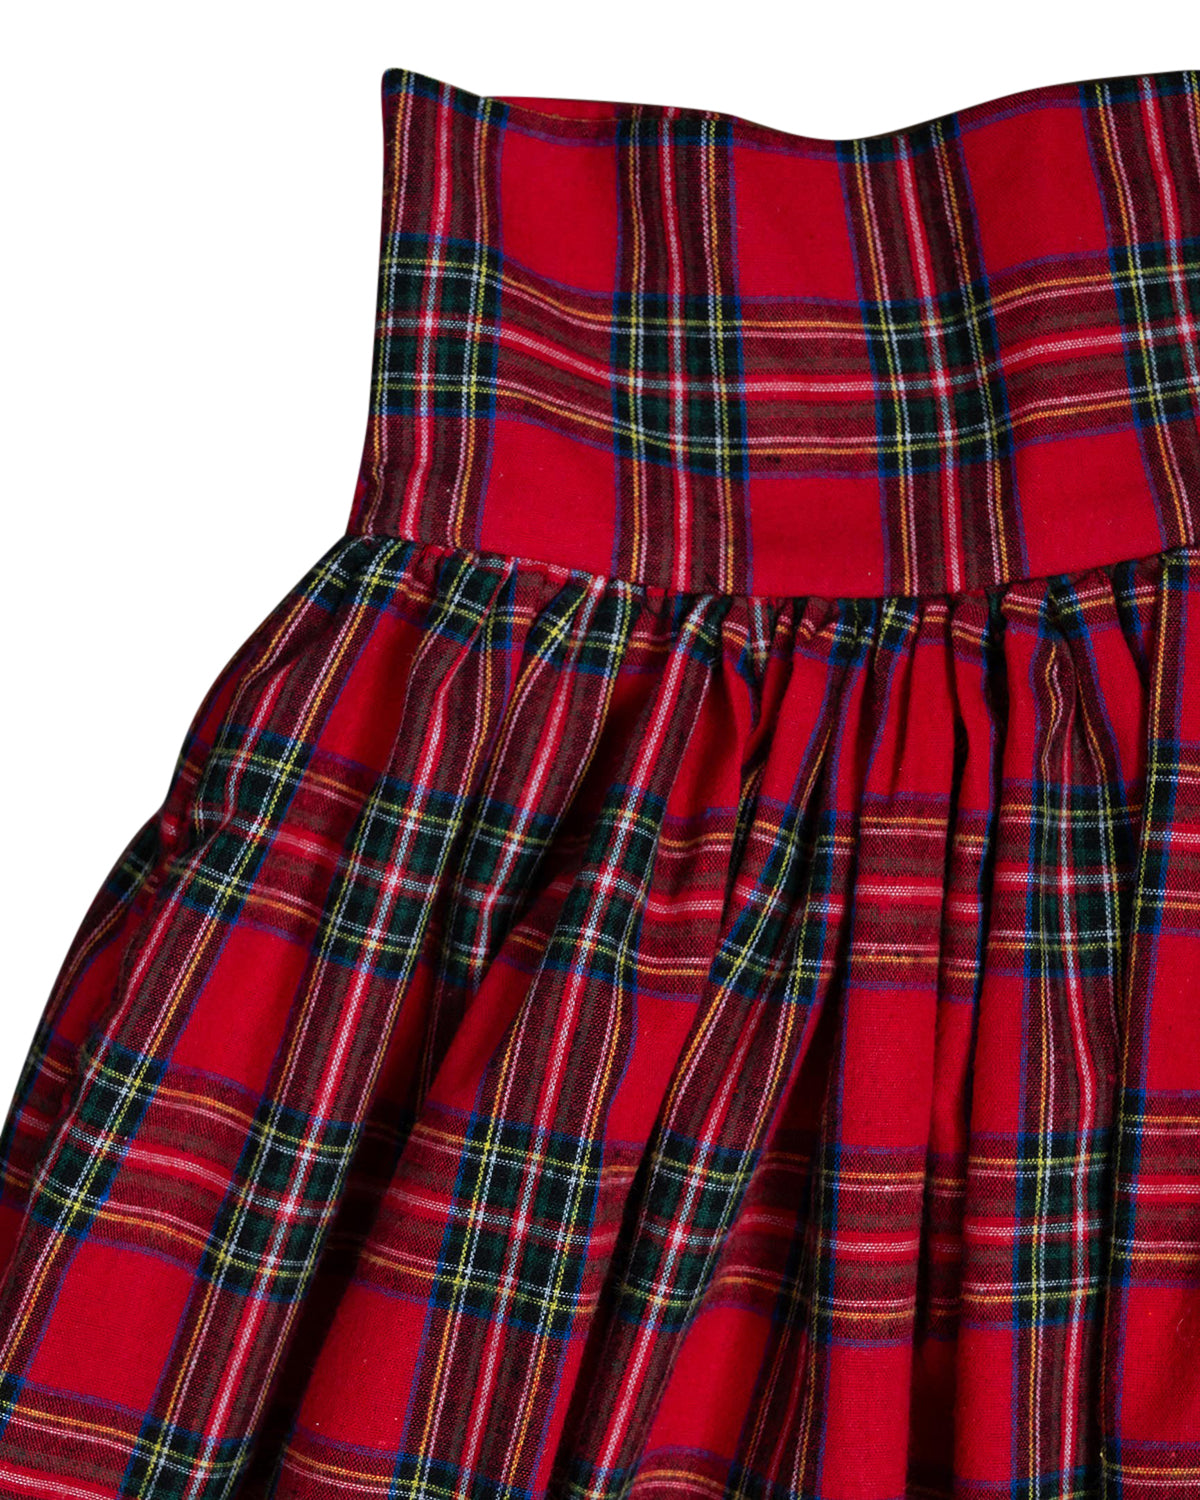 Red Tartan Plaid Maxi Skirt for Ladies